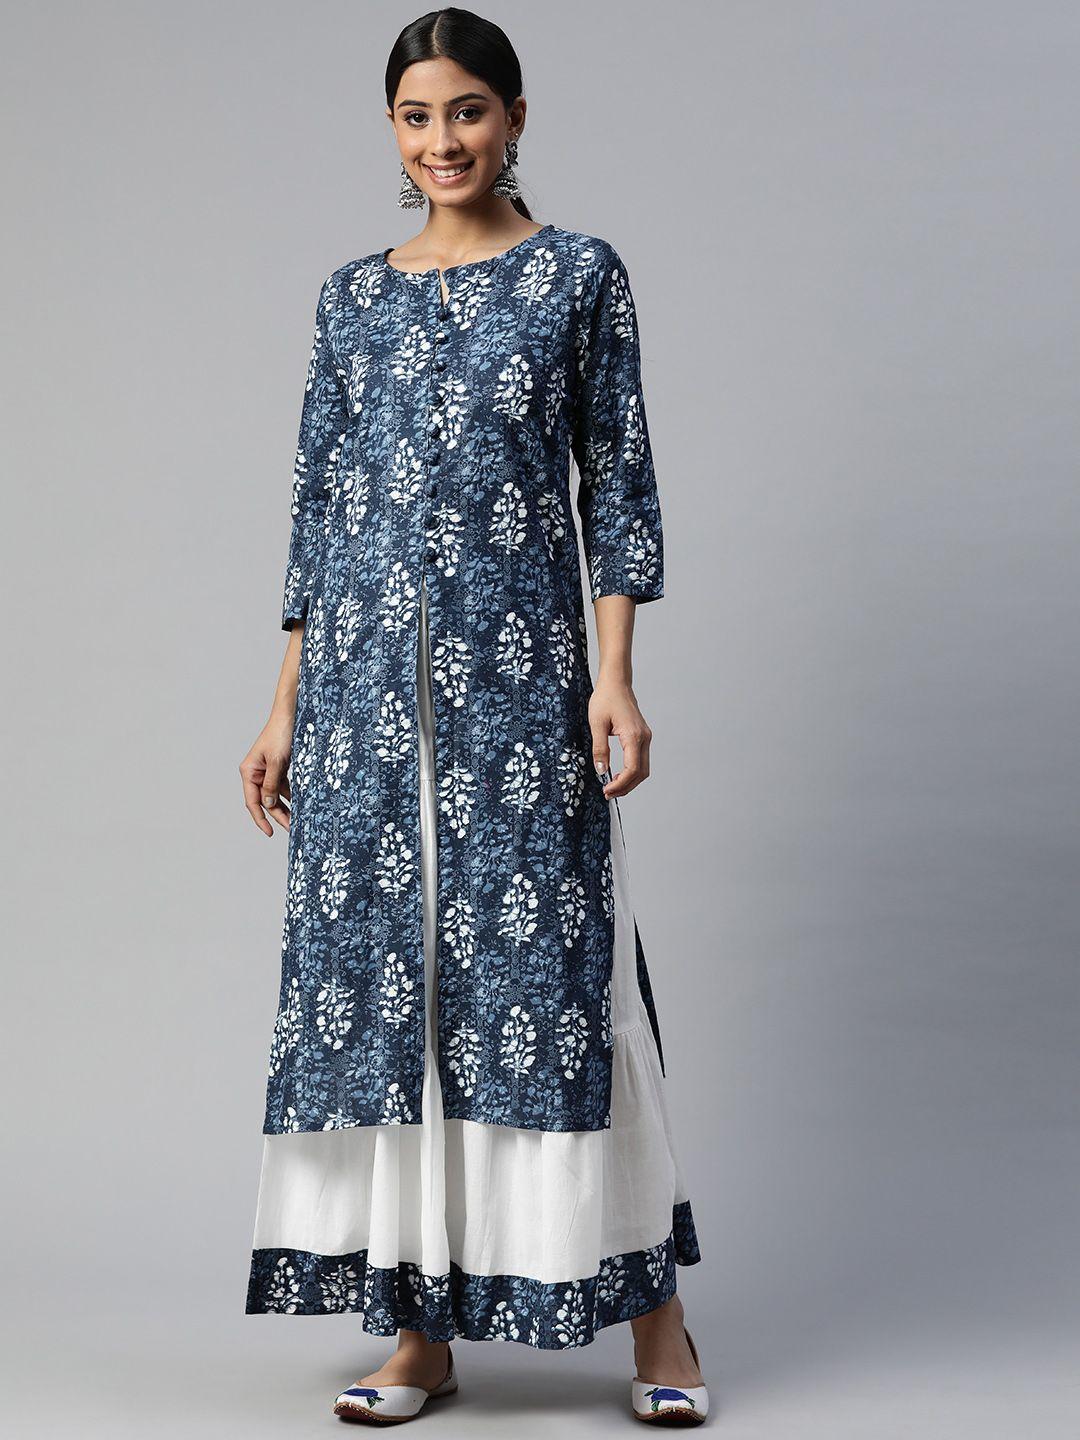 svarchi women navy blue ethnic motifs printed kurta with skirt